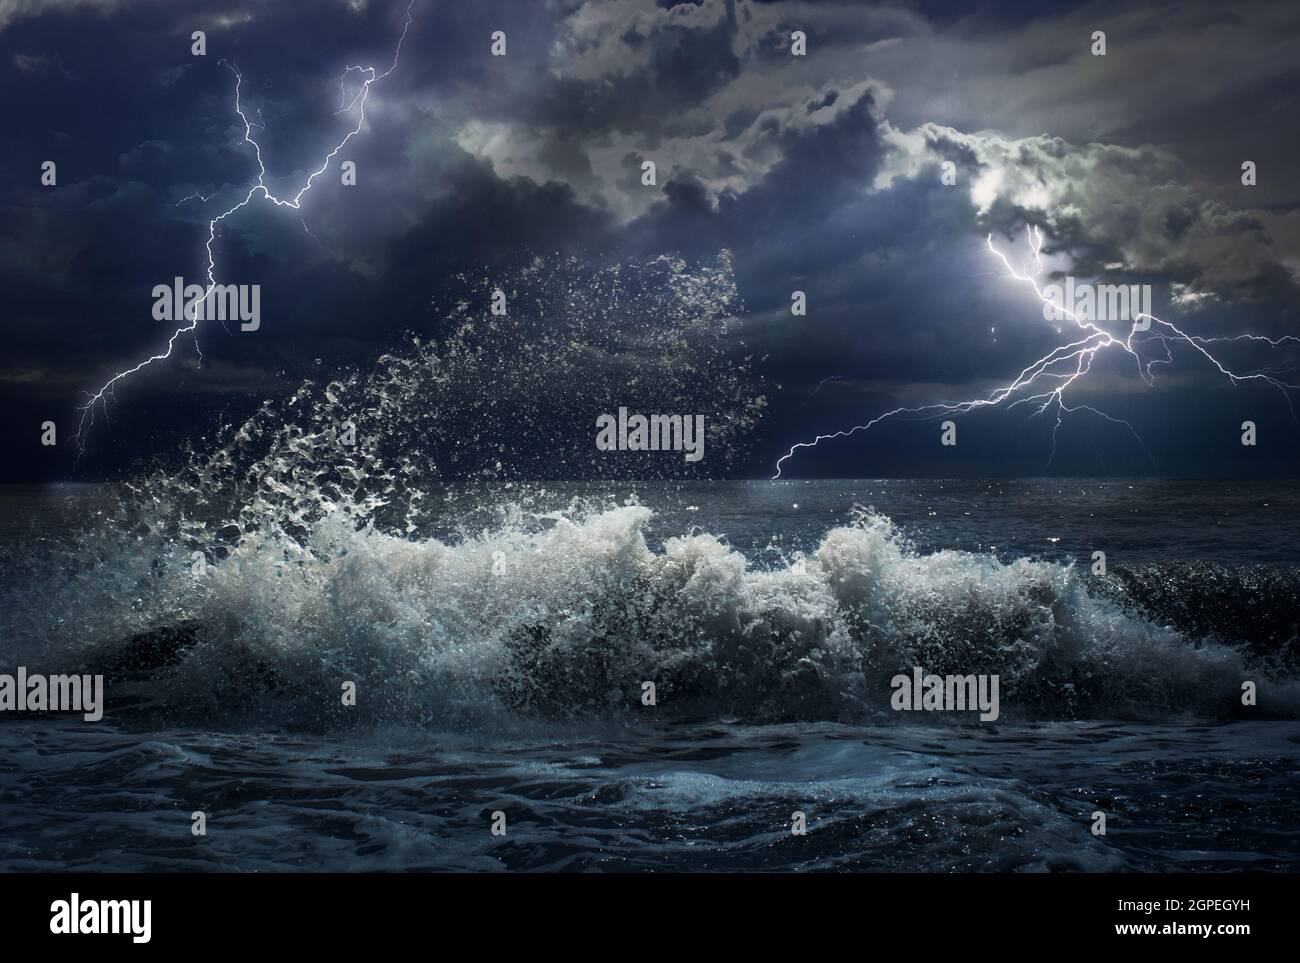 Dark night storm in ocean with lightings Stock Photo